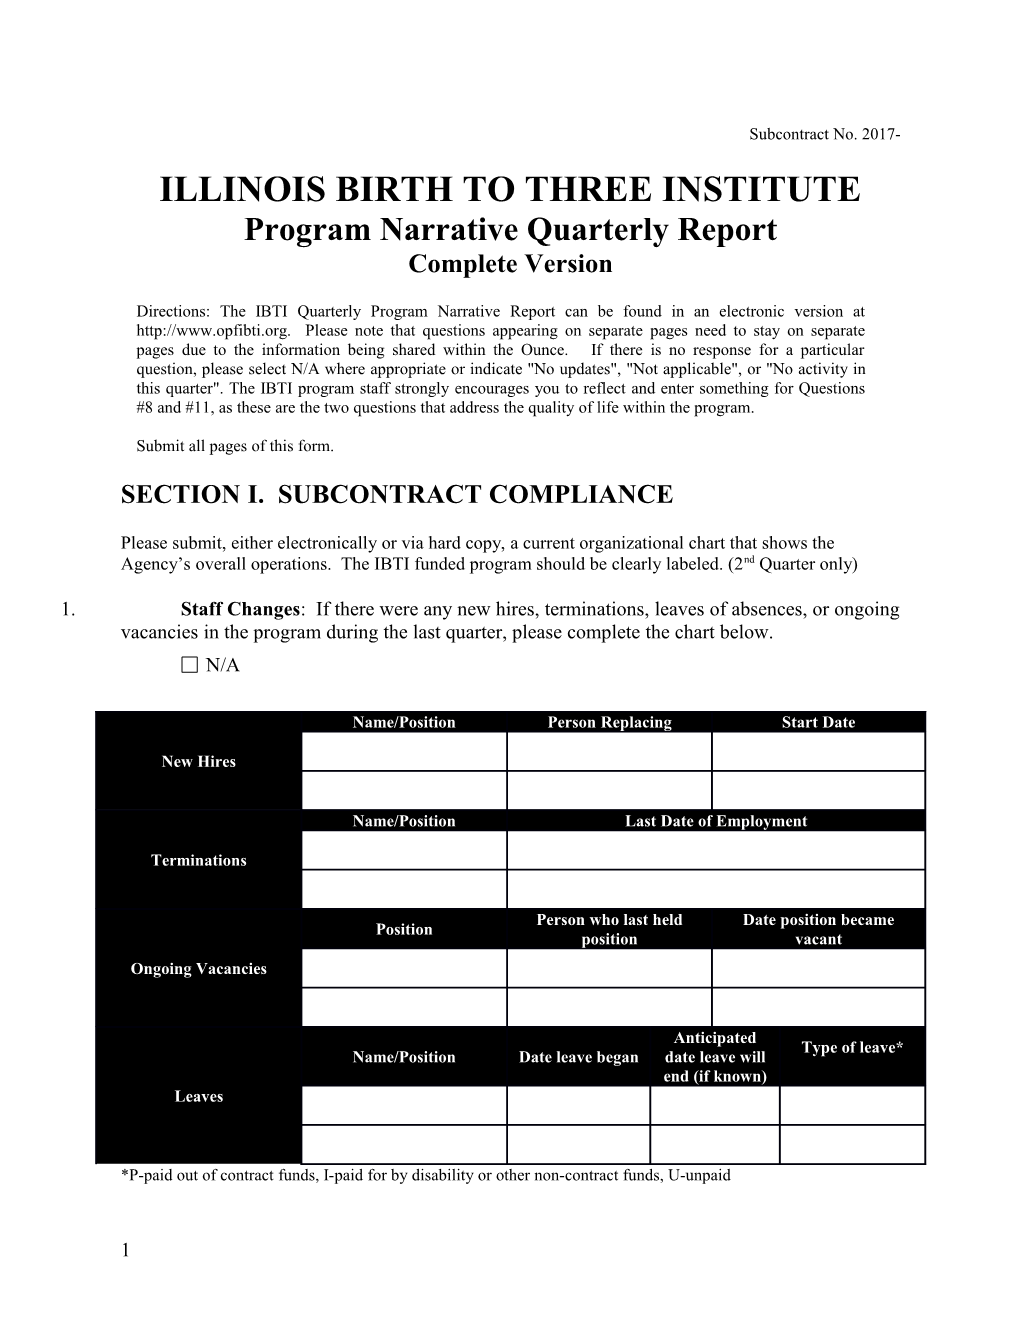 Illinois Birth to Three Institute